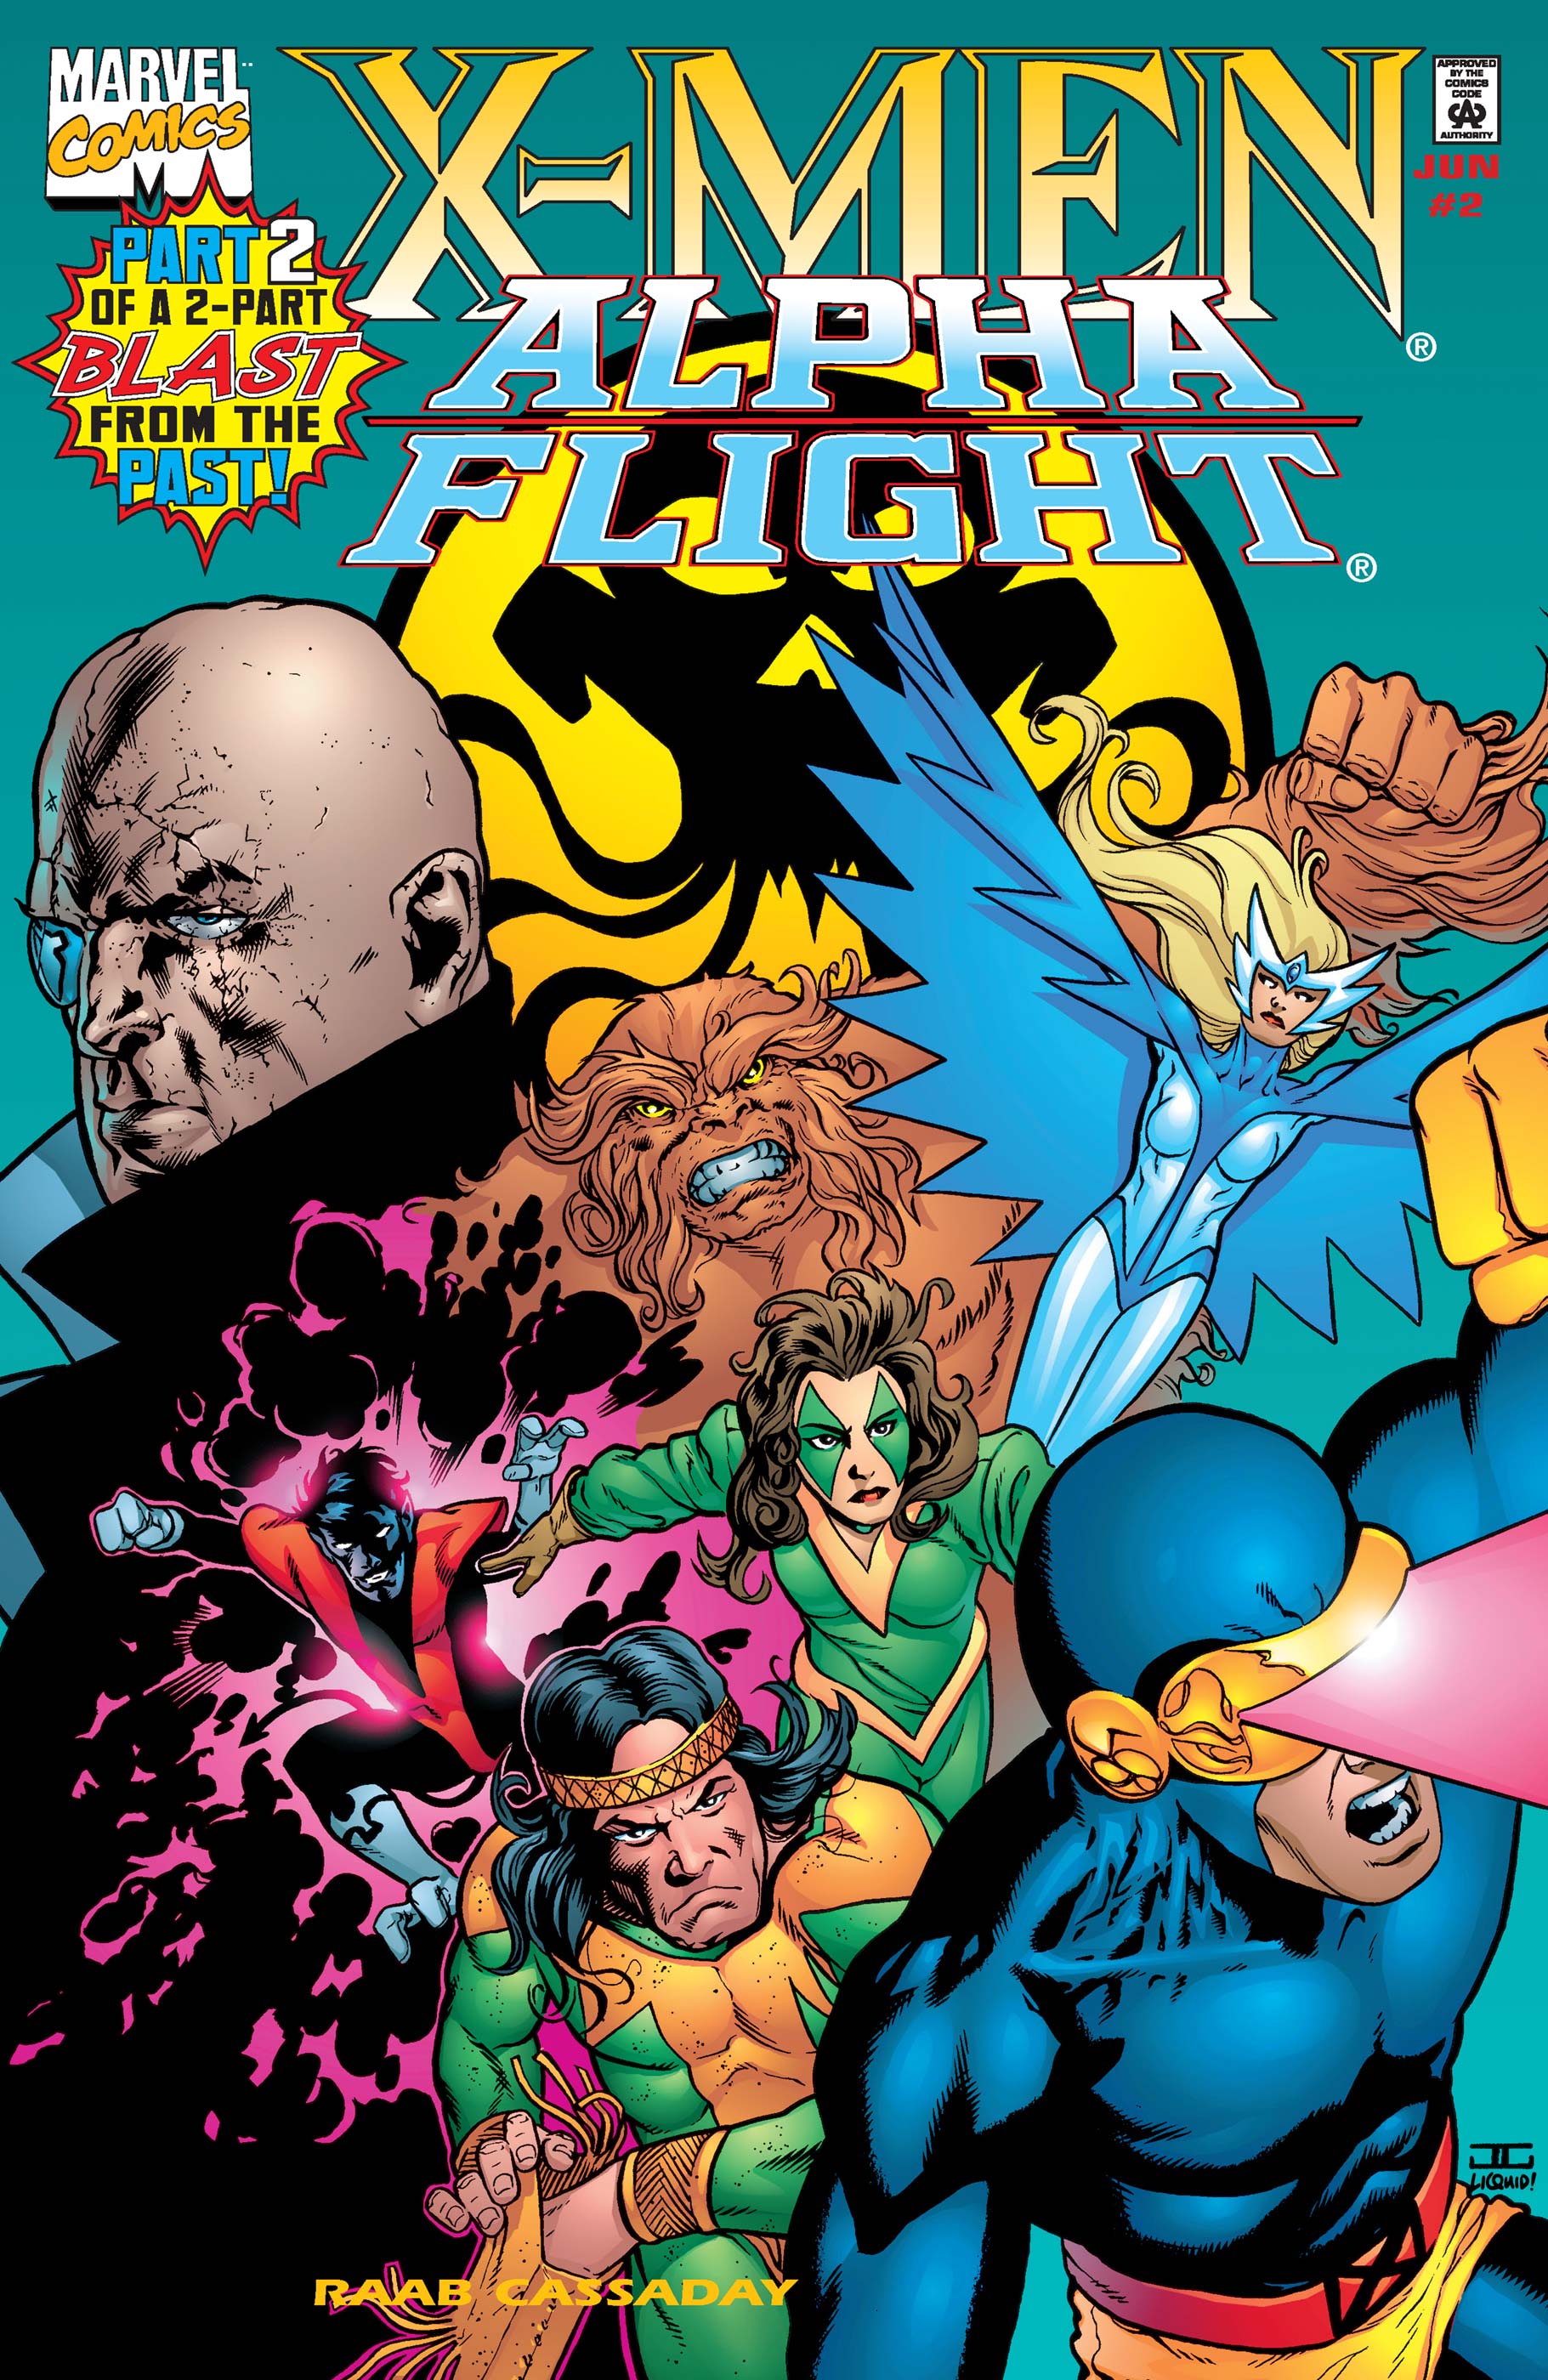 X-Men/Alpha Flight (1998) #2